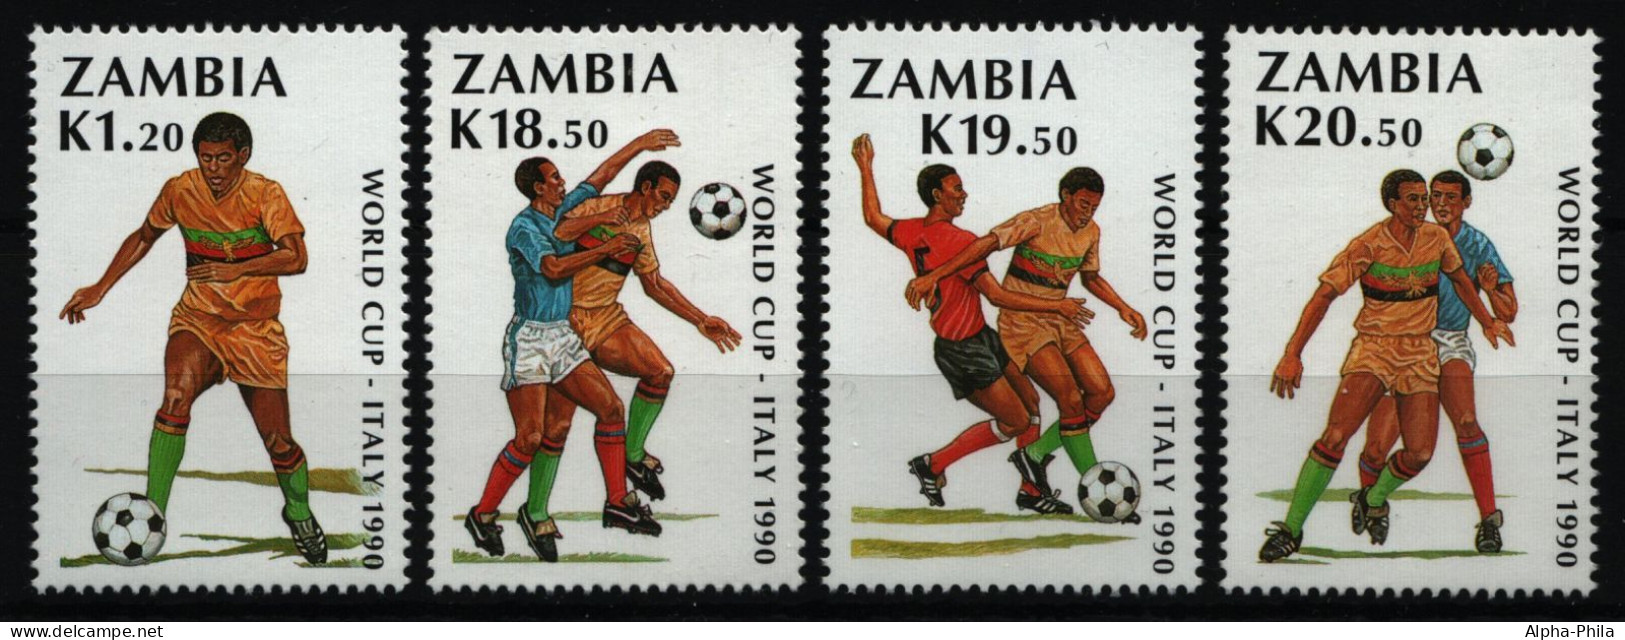 Sambia 1990 - Mi-Nr. 515-518 ** - MNH - Fußball / Soccer - Zambie (1965-...)